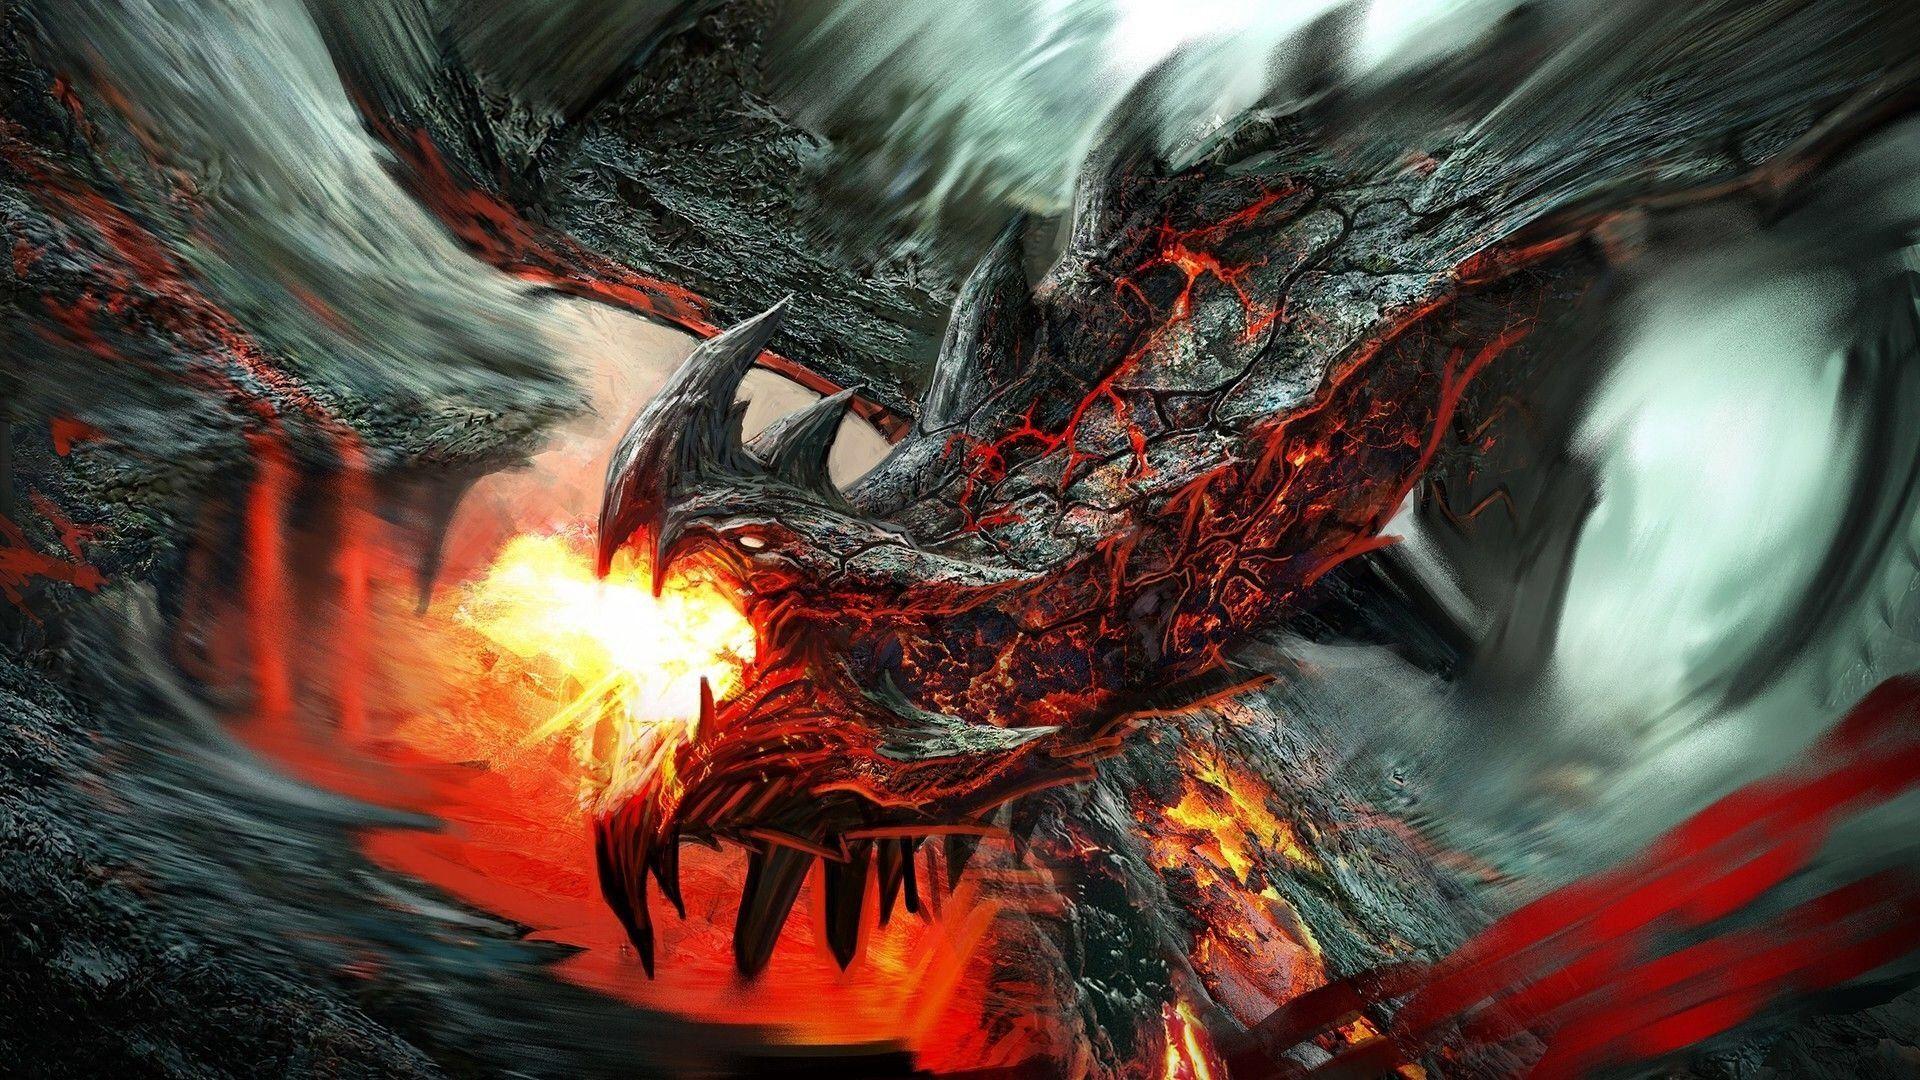 cool fire dragon